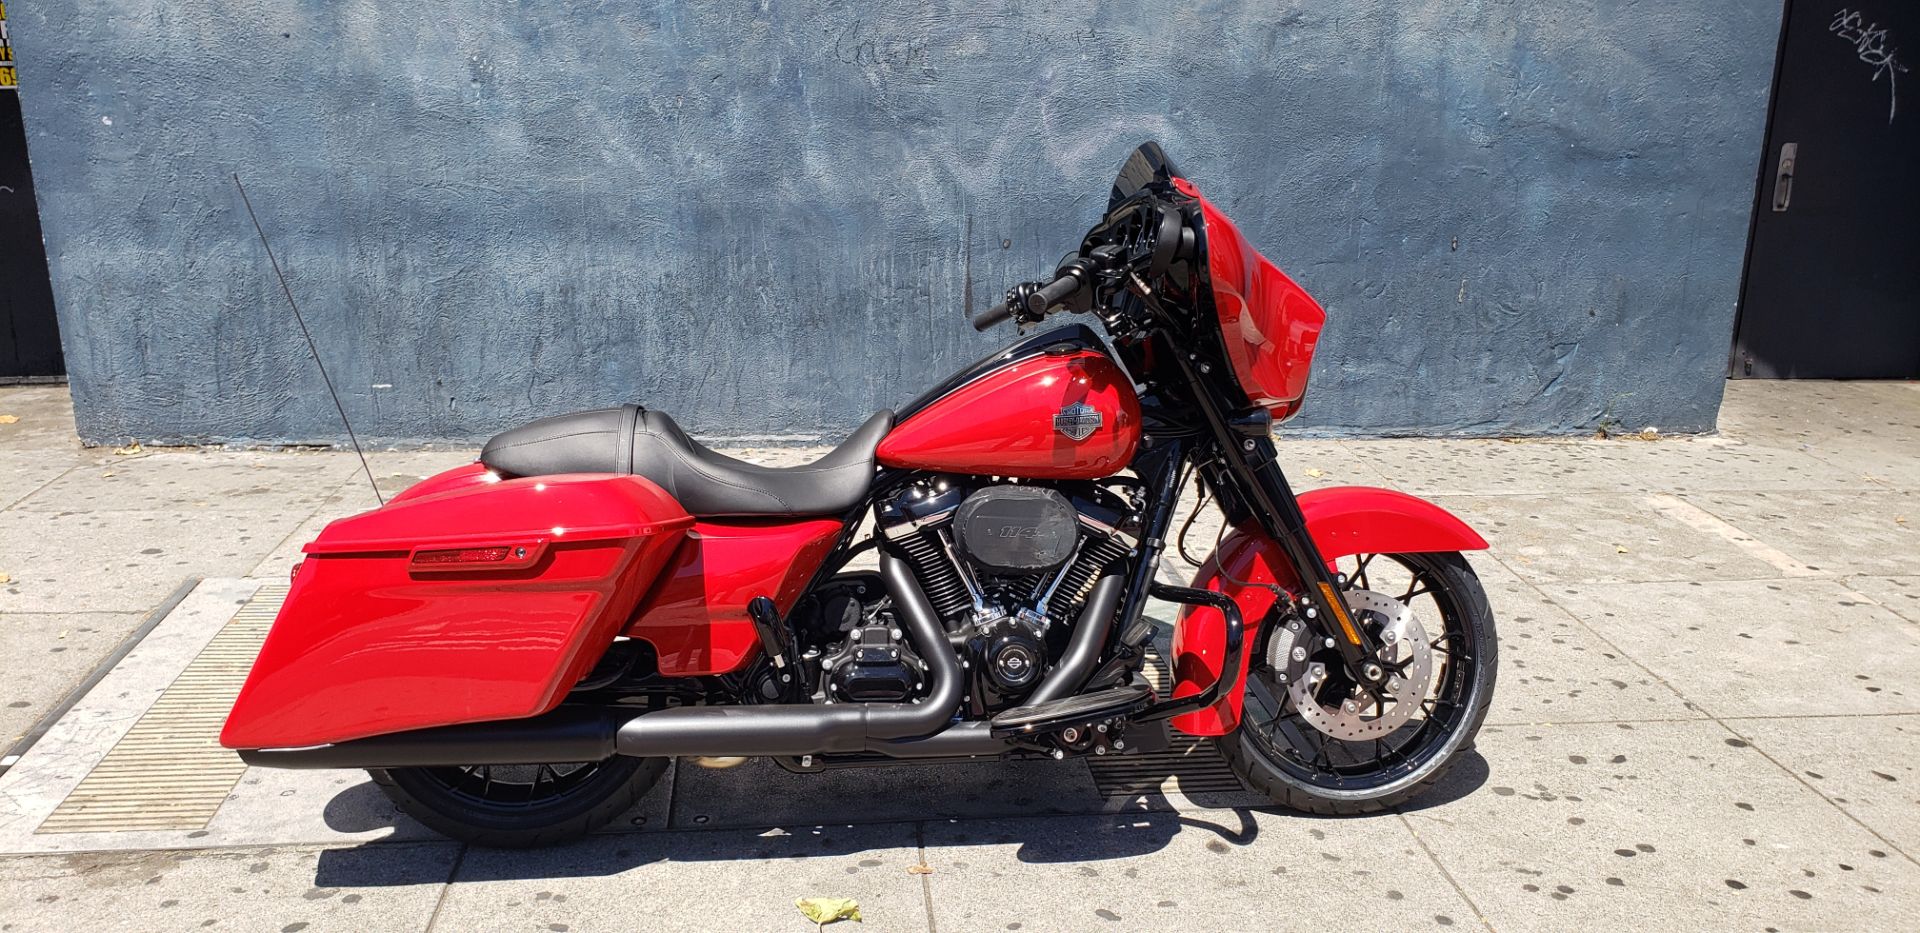 New 2022 Harley-Davidson Street Glide® Special, Redline Red (Black Finish)  - Specs, Price, Photos | San Francisco CA Dealer | N629457